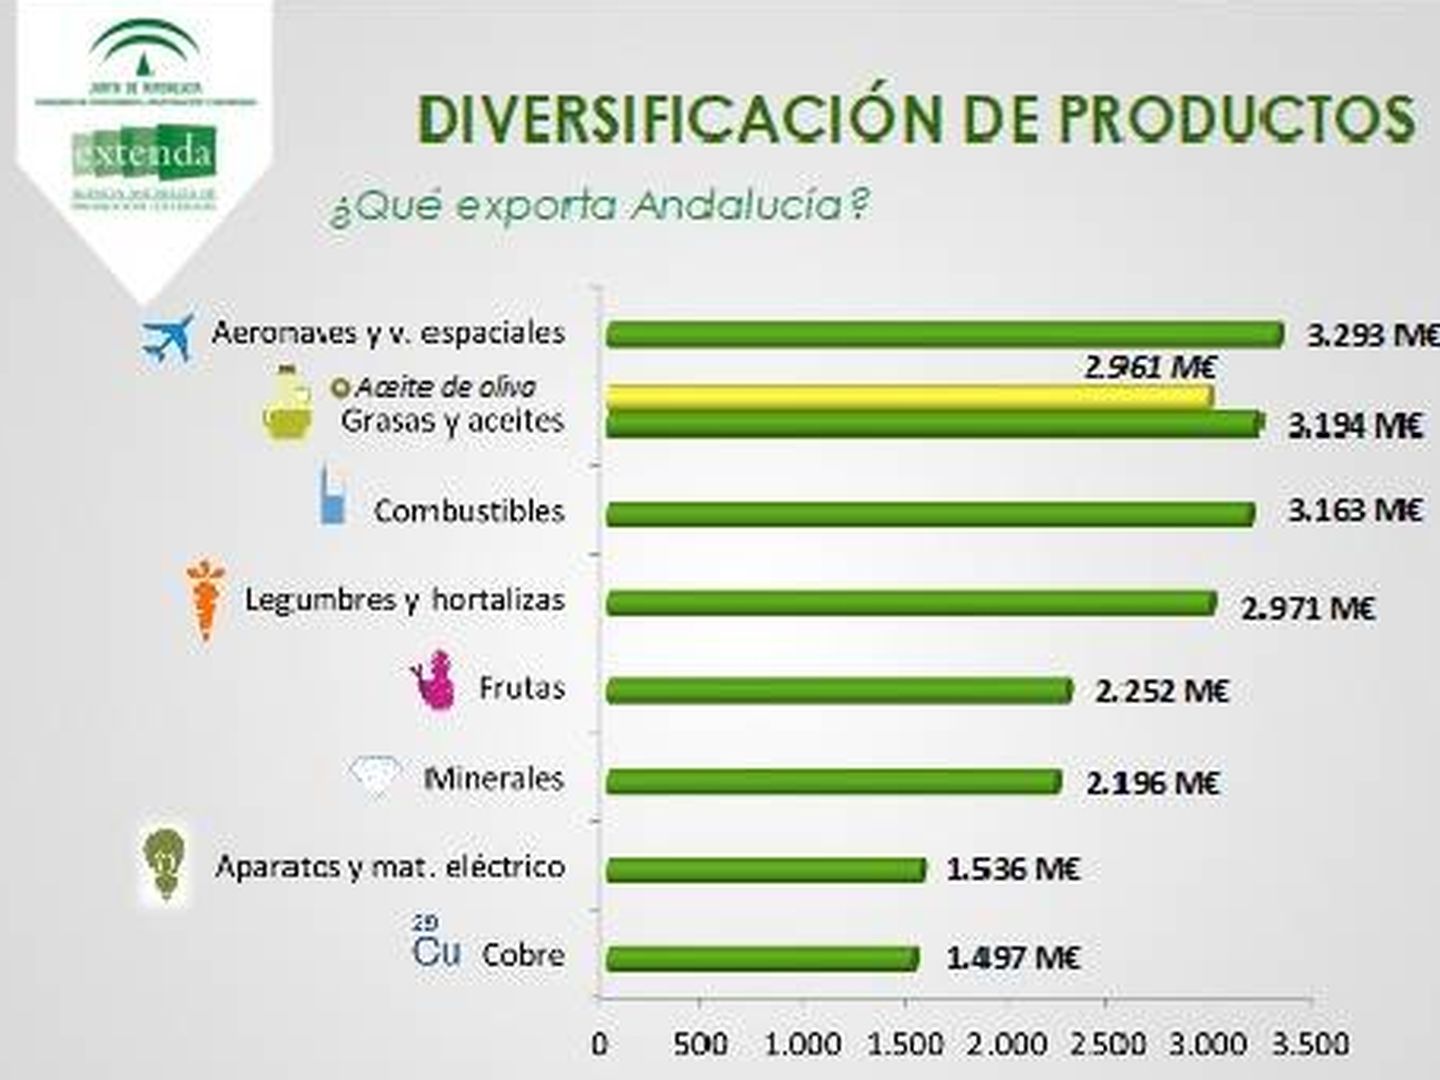 Principales productos que exporta Andalucía. (Extenda)